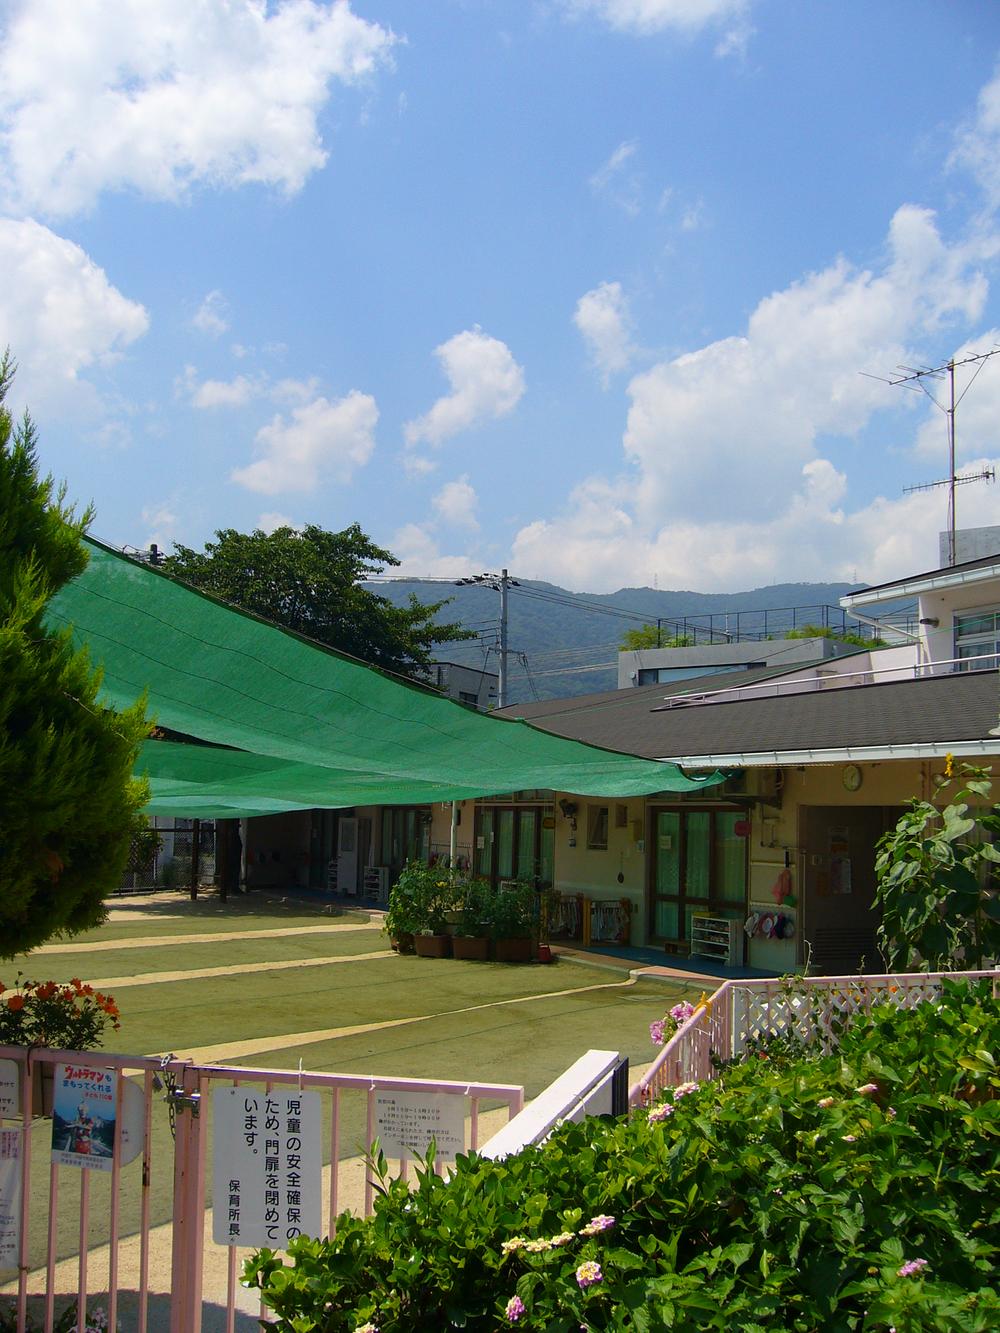 kindergarten ・ Nursery. Ashiya Tateiwa Garden nursery